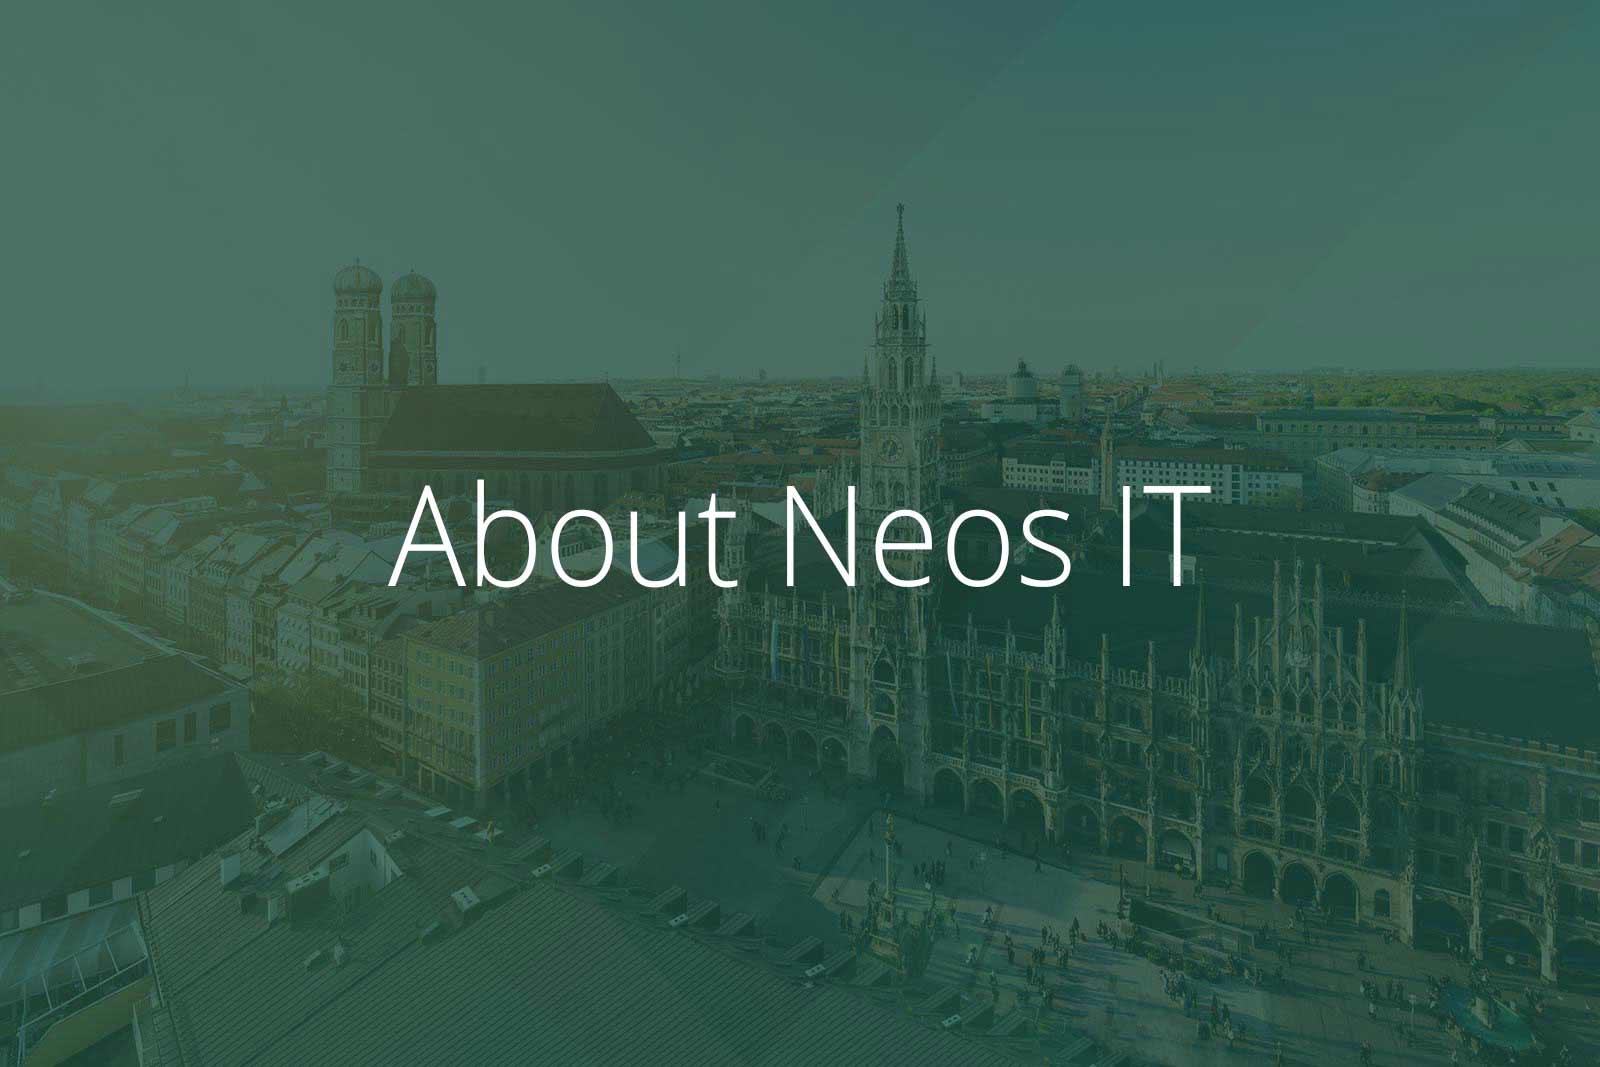 About Neos IT Services, Image Munich